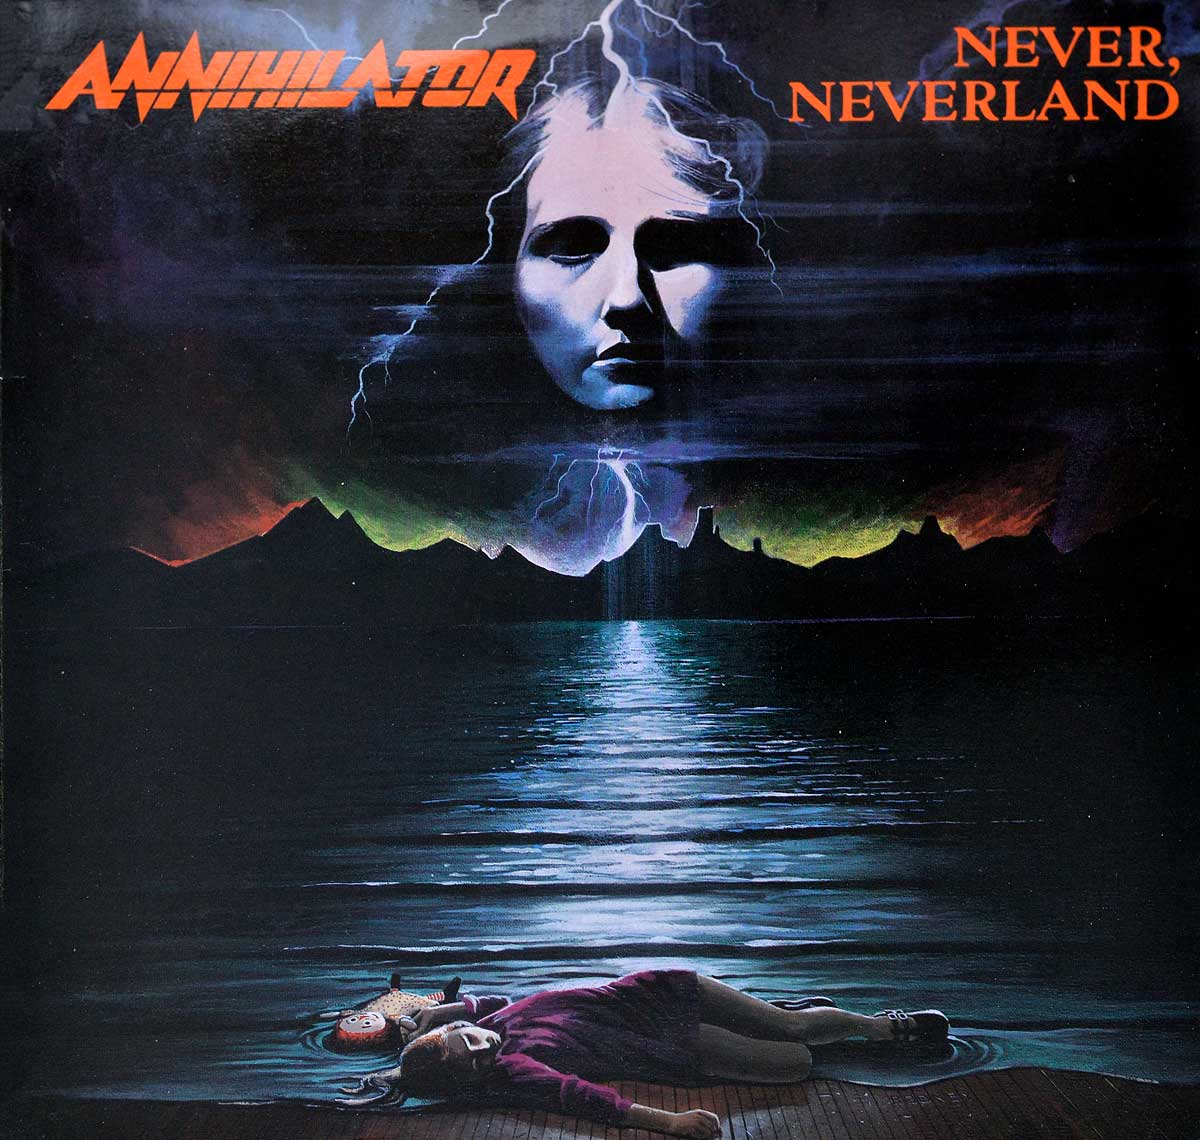 Large Album Front Cover Photo of ANNIHILATOR - Never, Neverland  